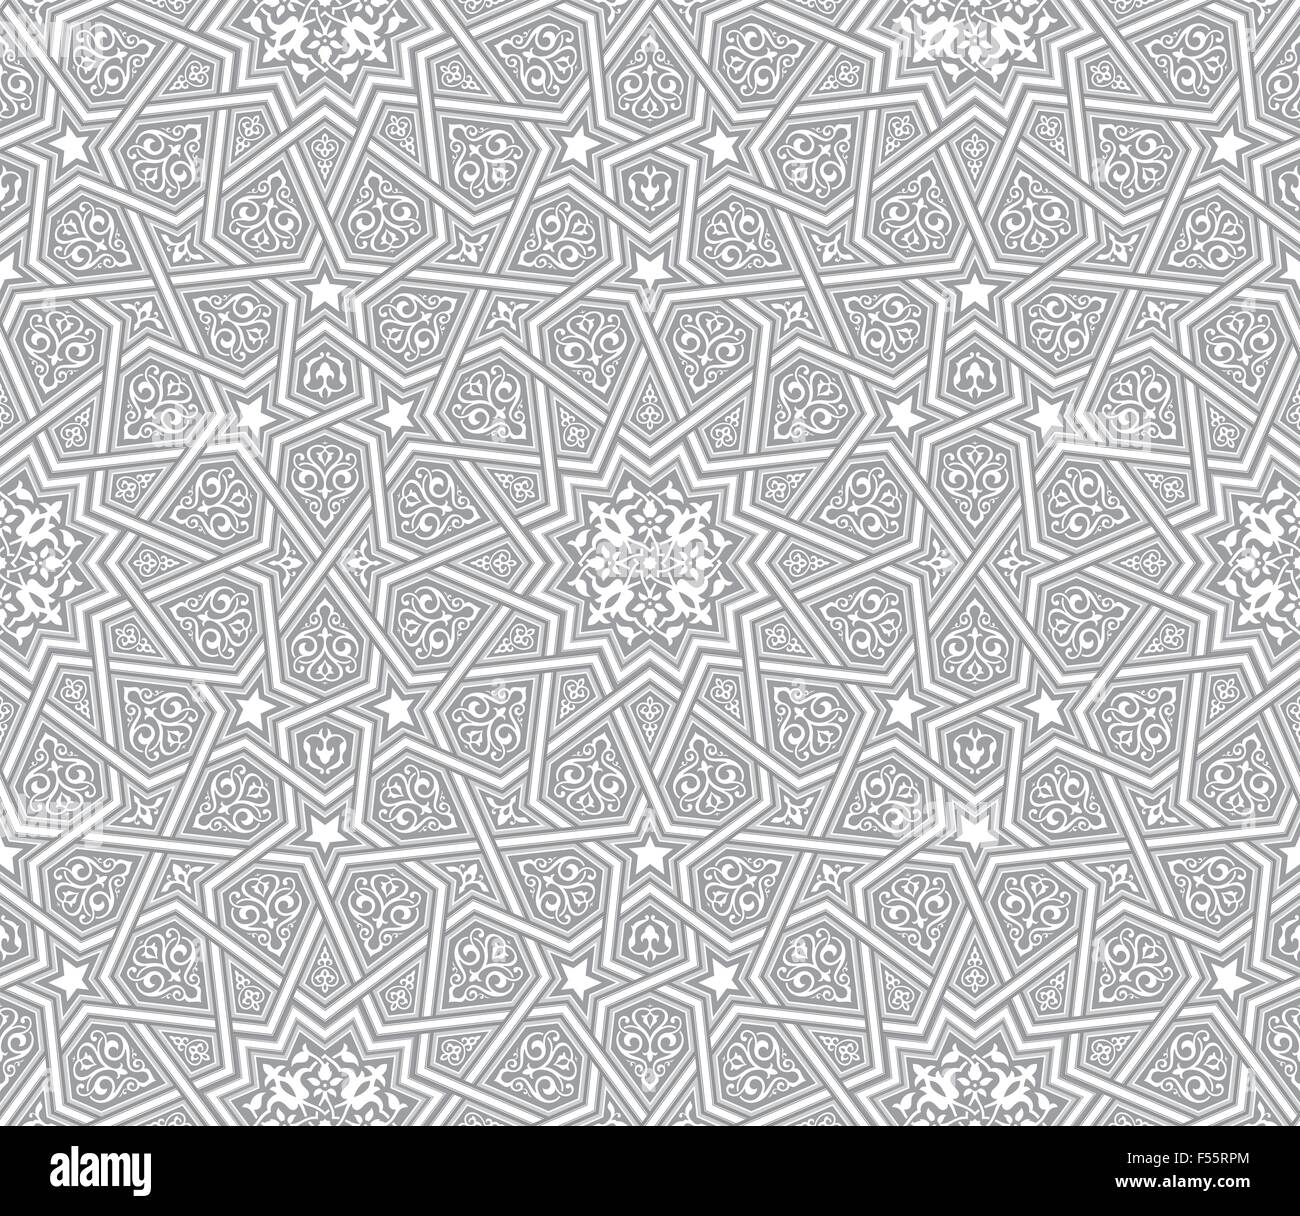 Islamische Ornament grau Vektor Hintergrund Stock Vektor